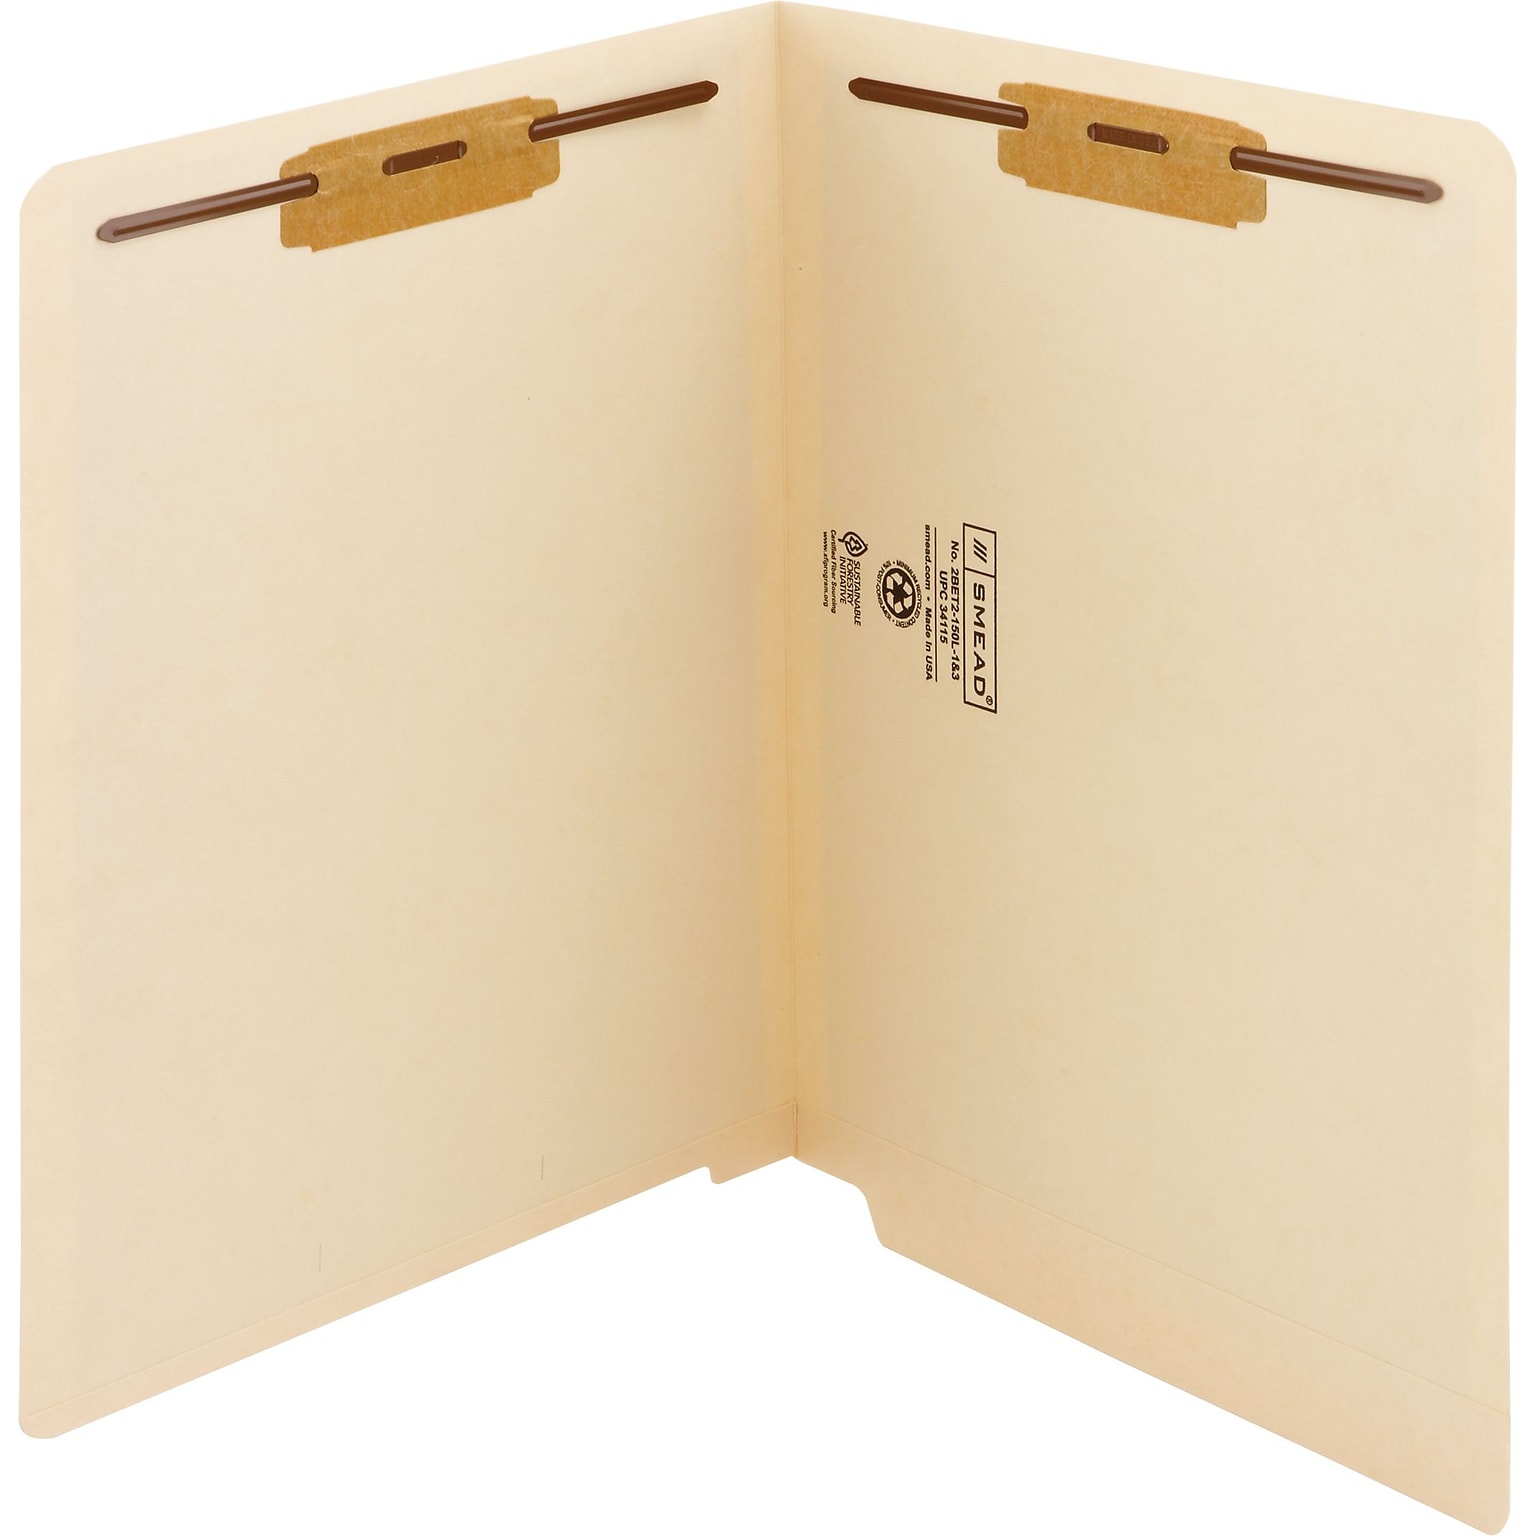 Smead® Shelf-Master Reinforced End-Tab File Folders, Letter Size, Manila, 250/Bx (34125)